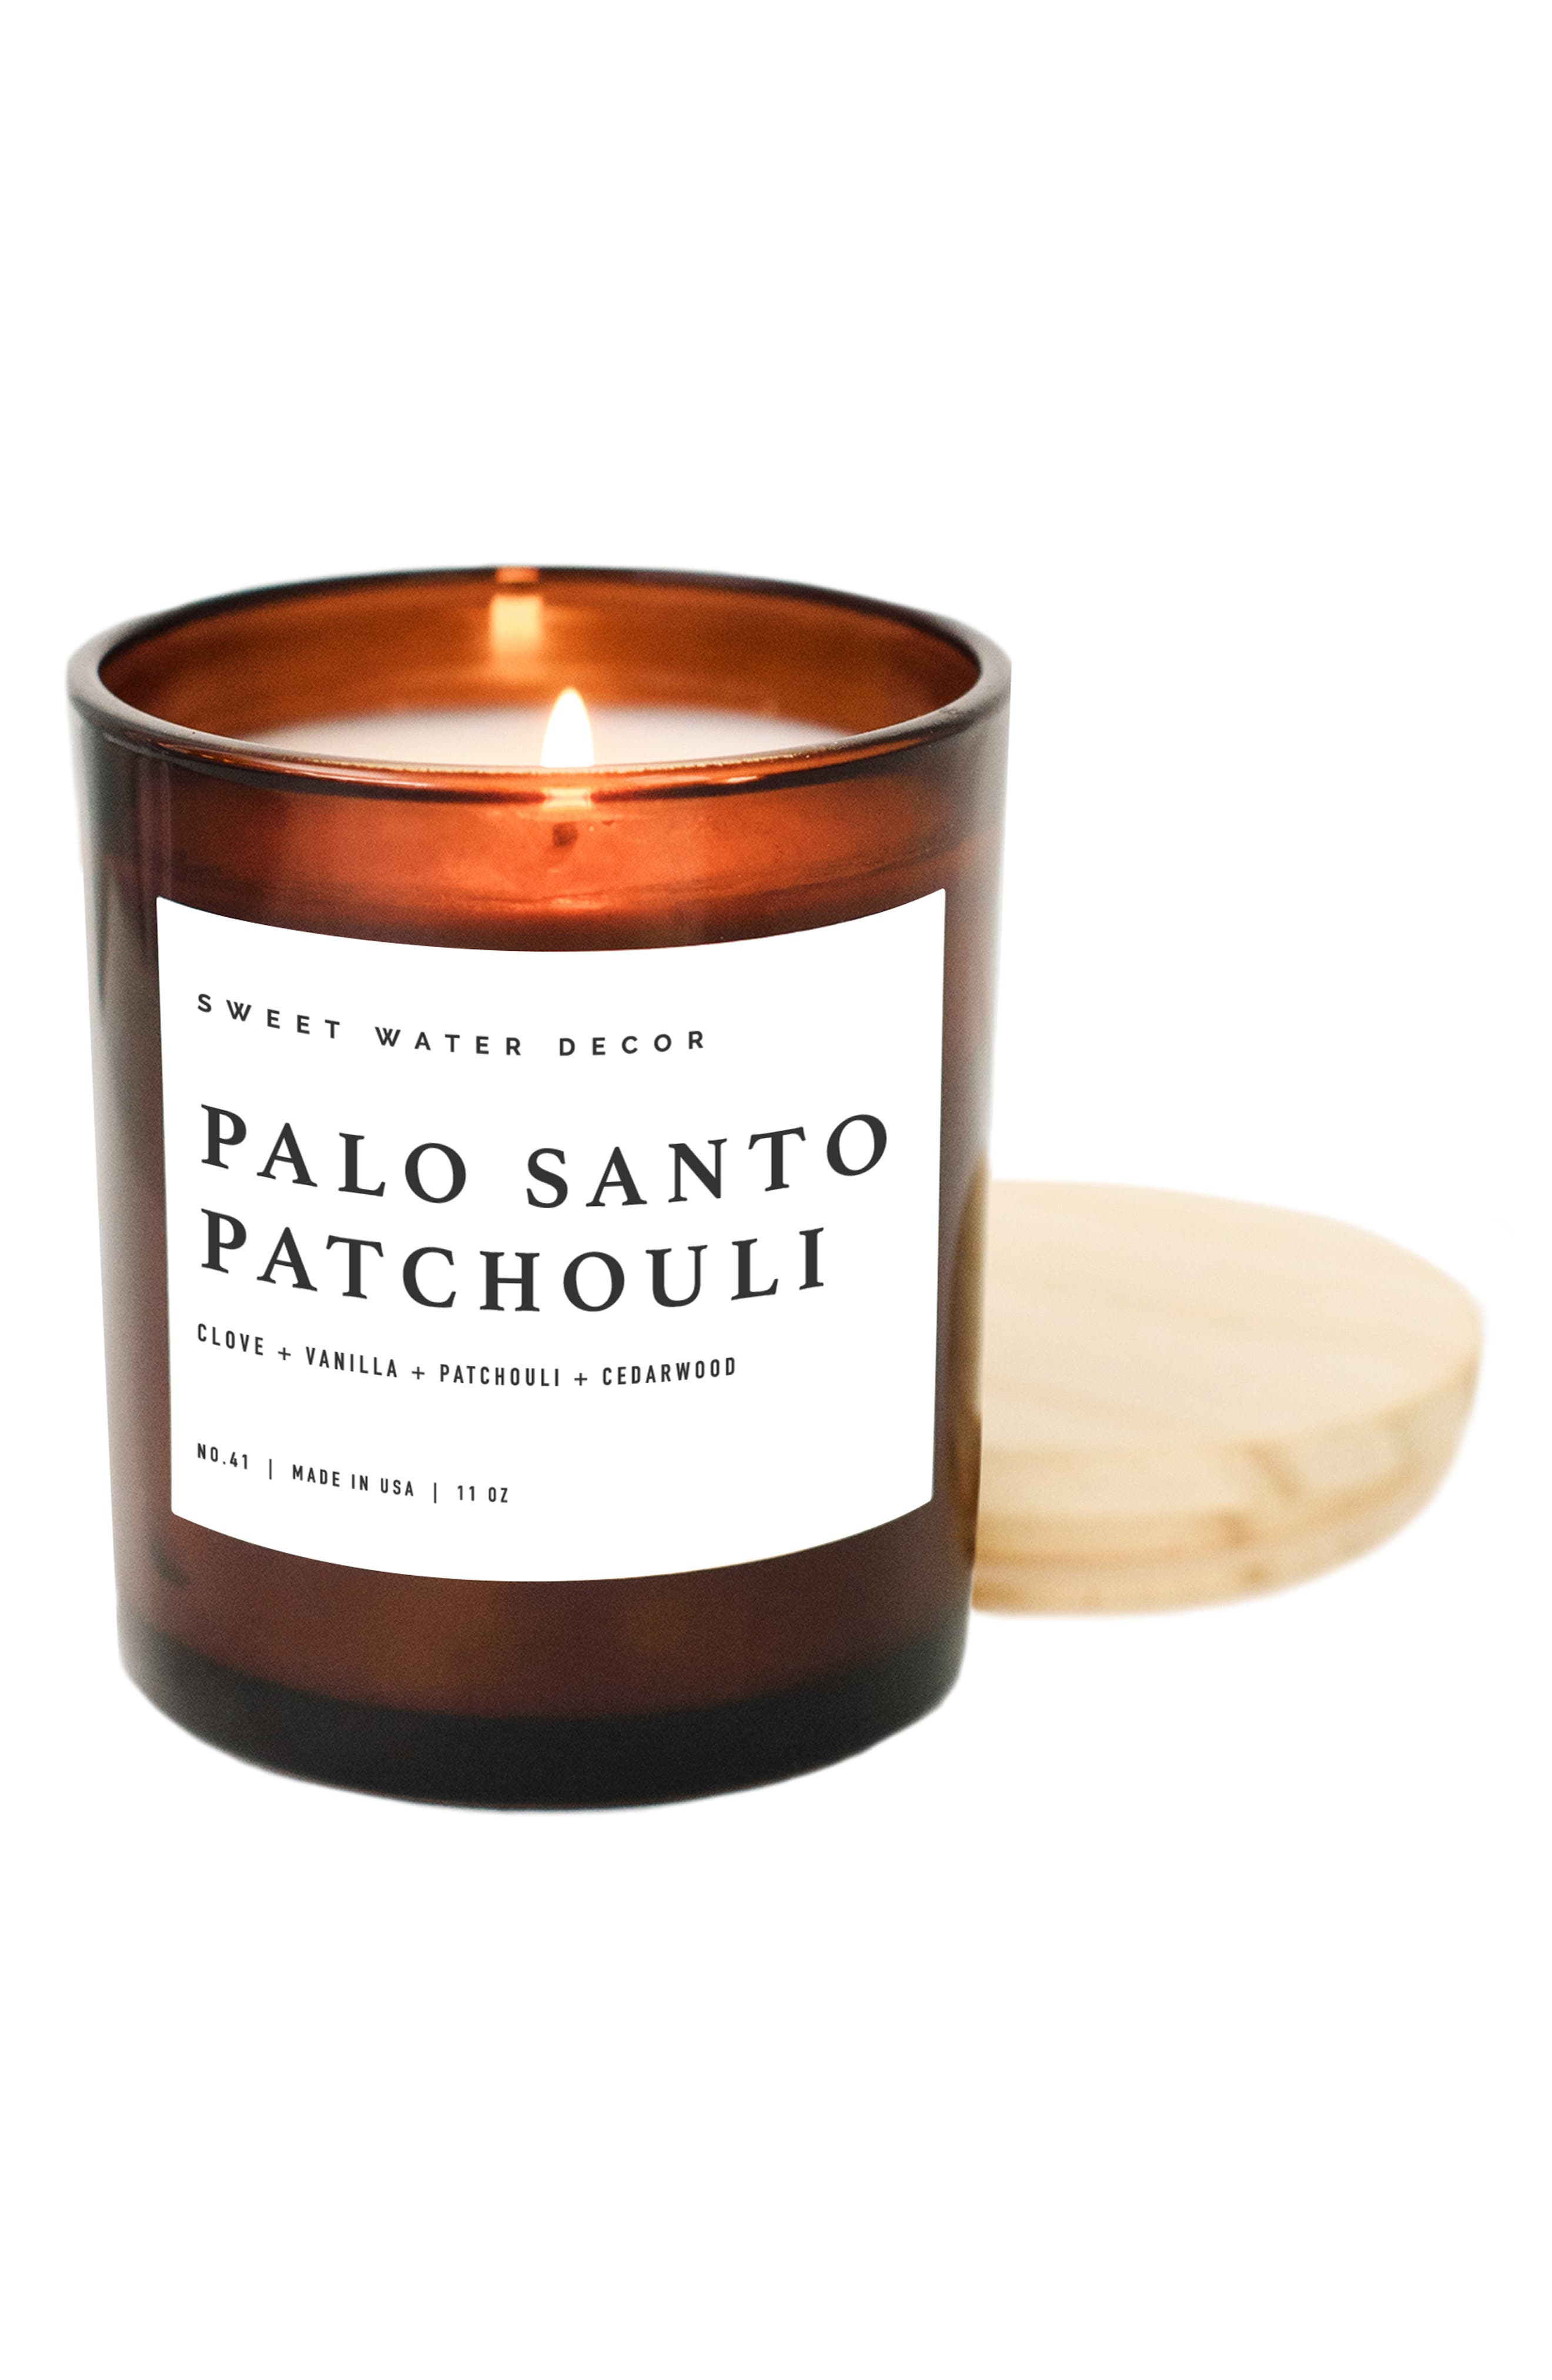 Palo Santo Patchouli 11 oz. Candle - Set of 2 SWEET WATER DECOR